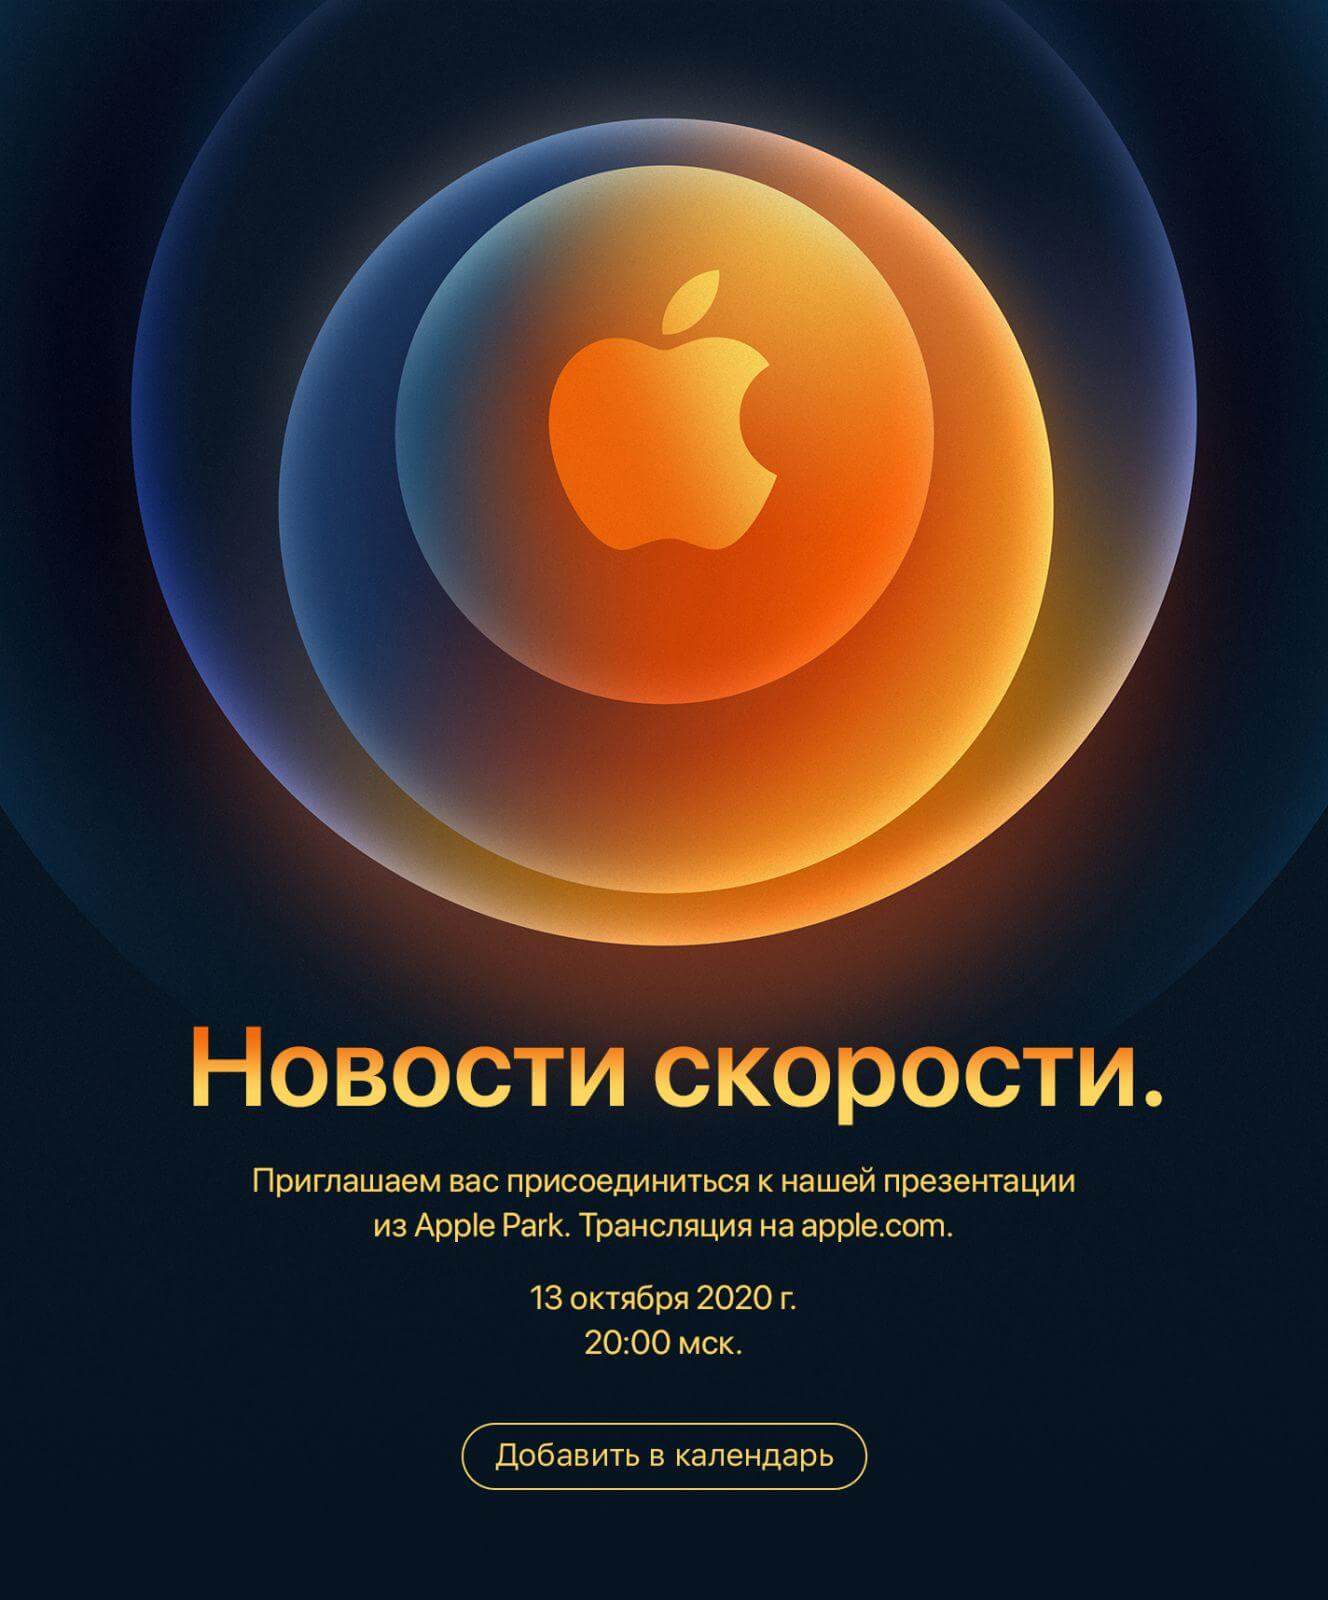 Официальная презентация iPhone 12 пройдет 13 октября